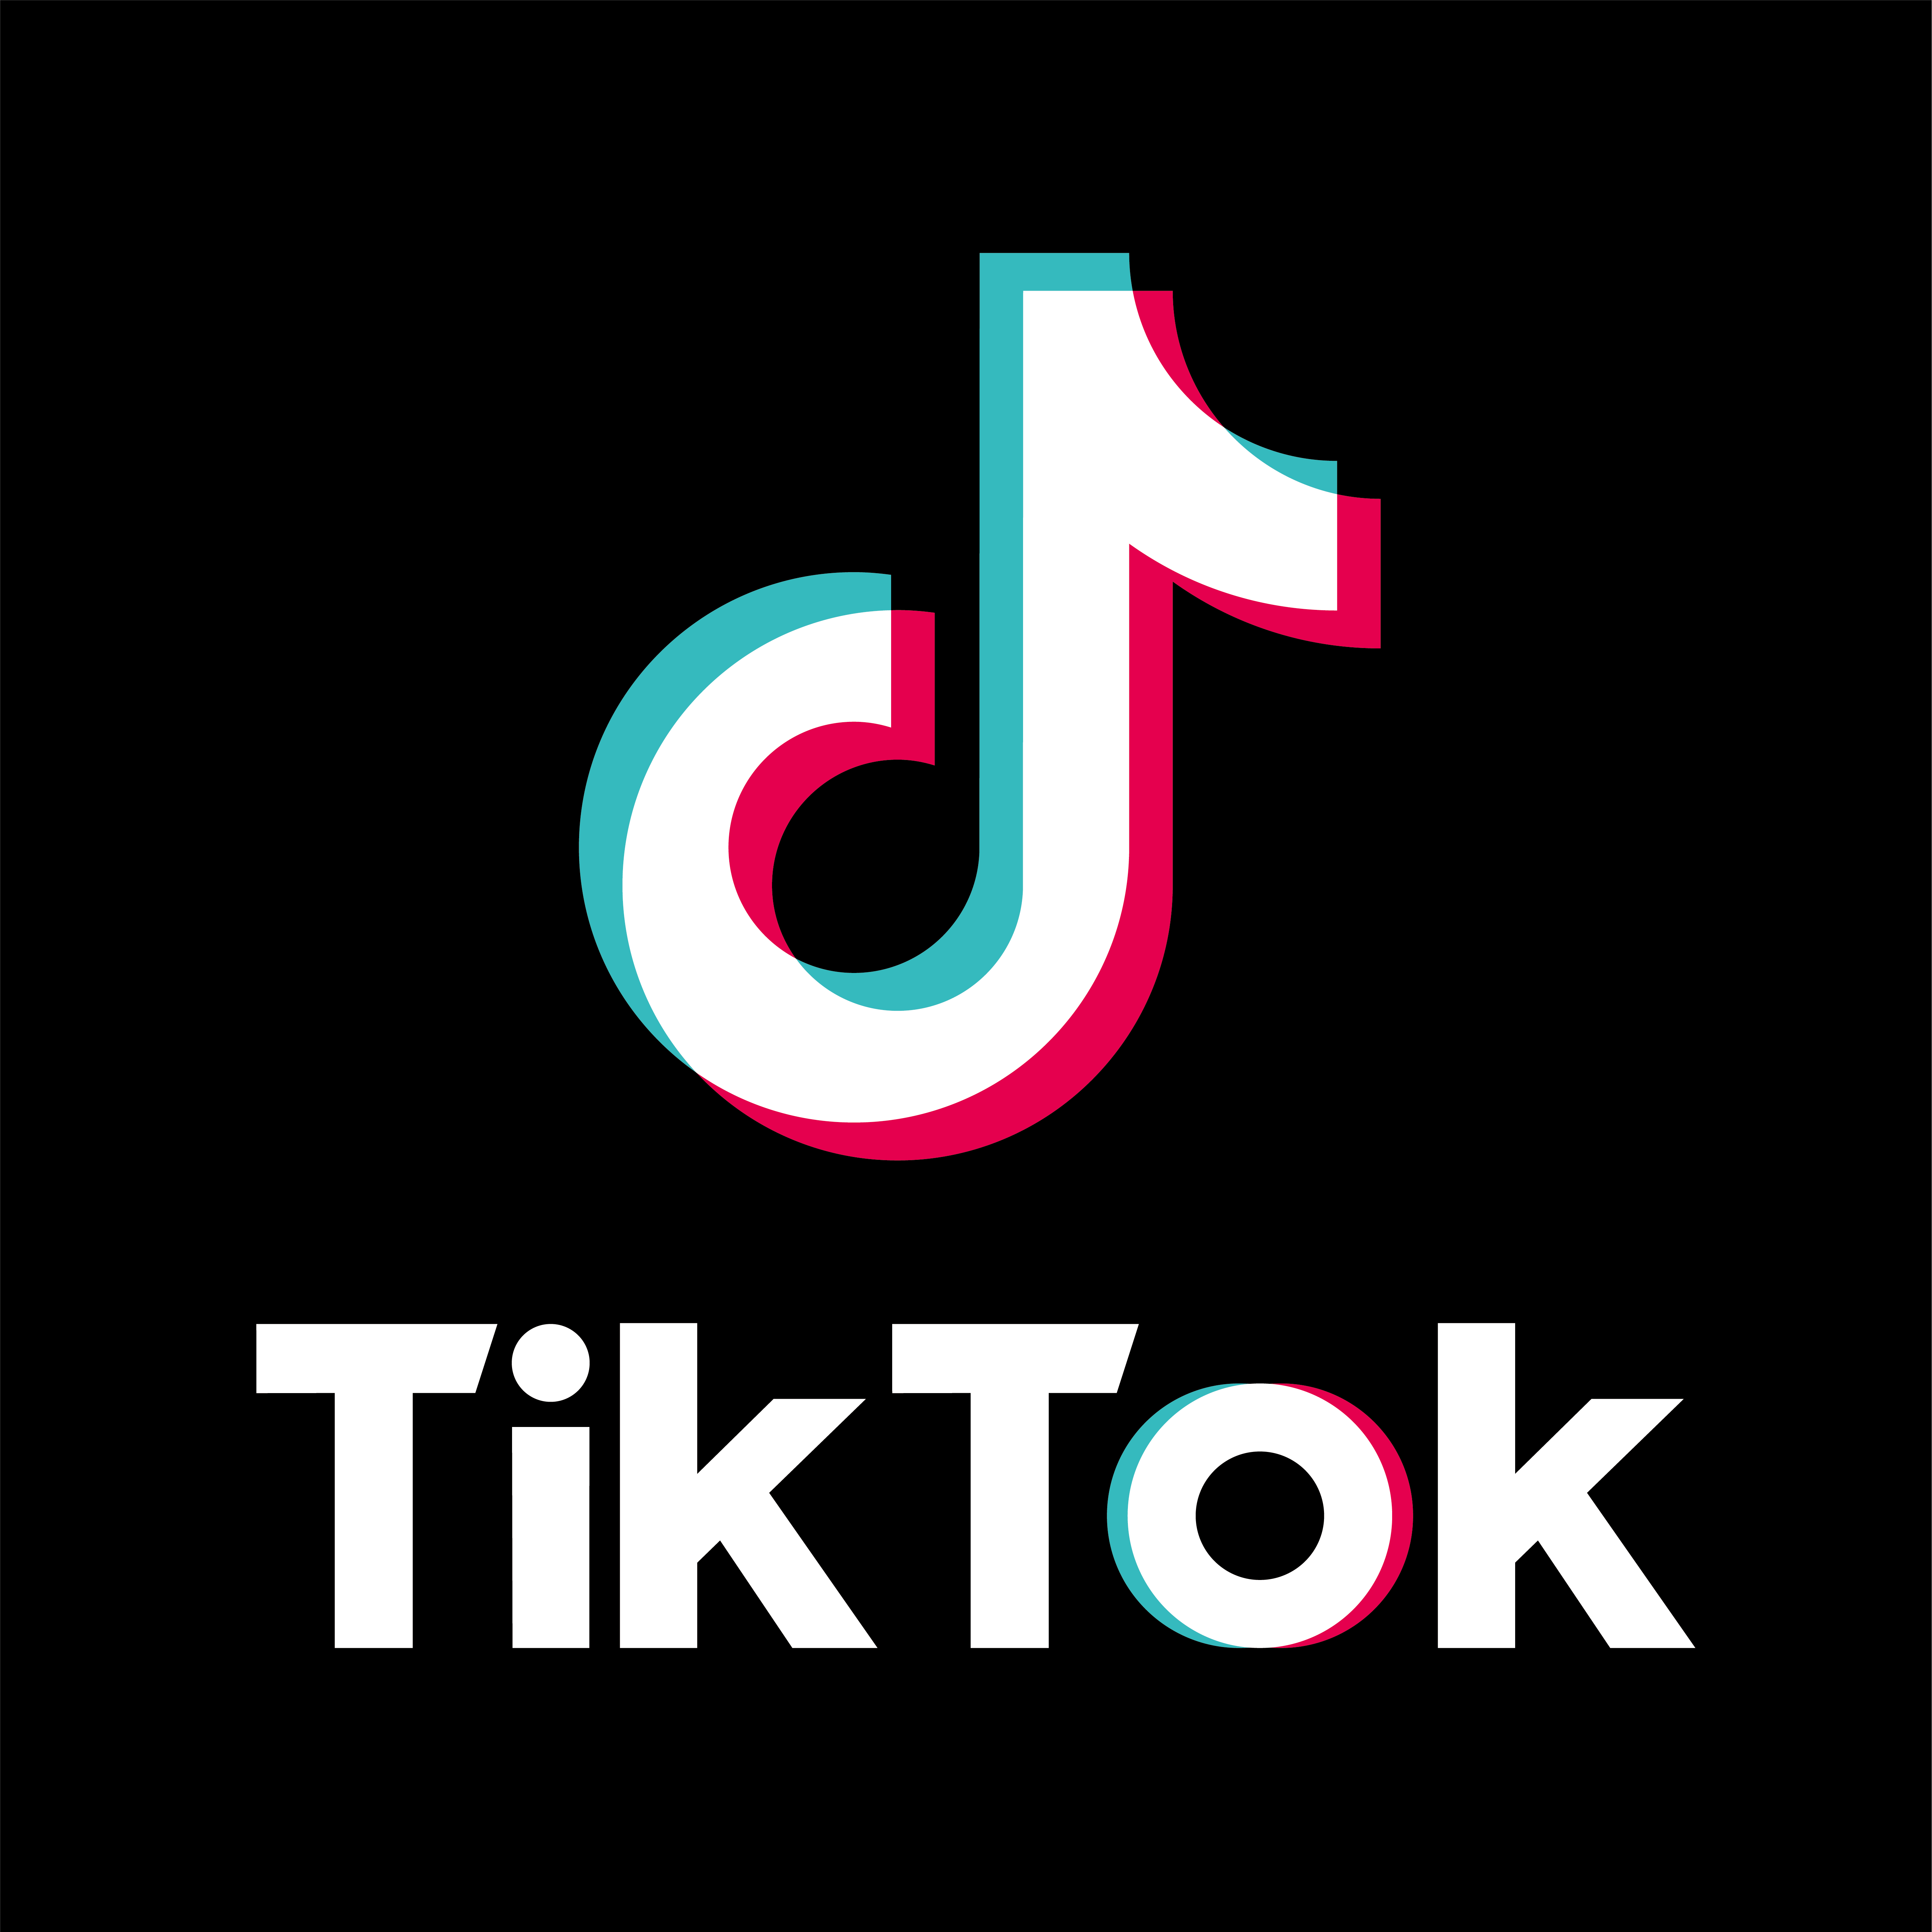 TikTok faces €345m fine from EU regulator for child data breaches